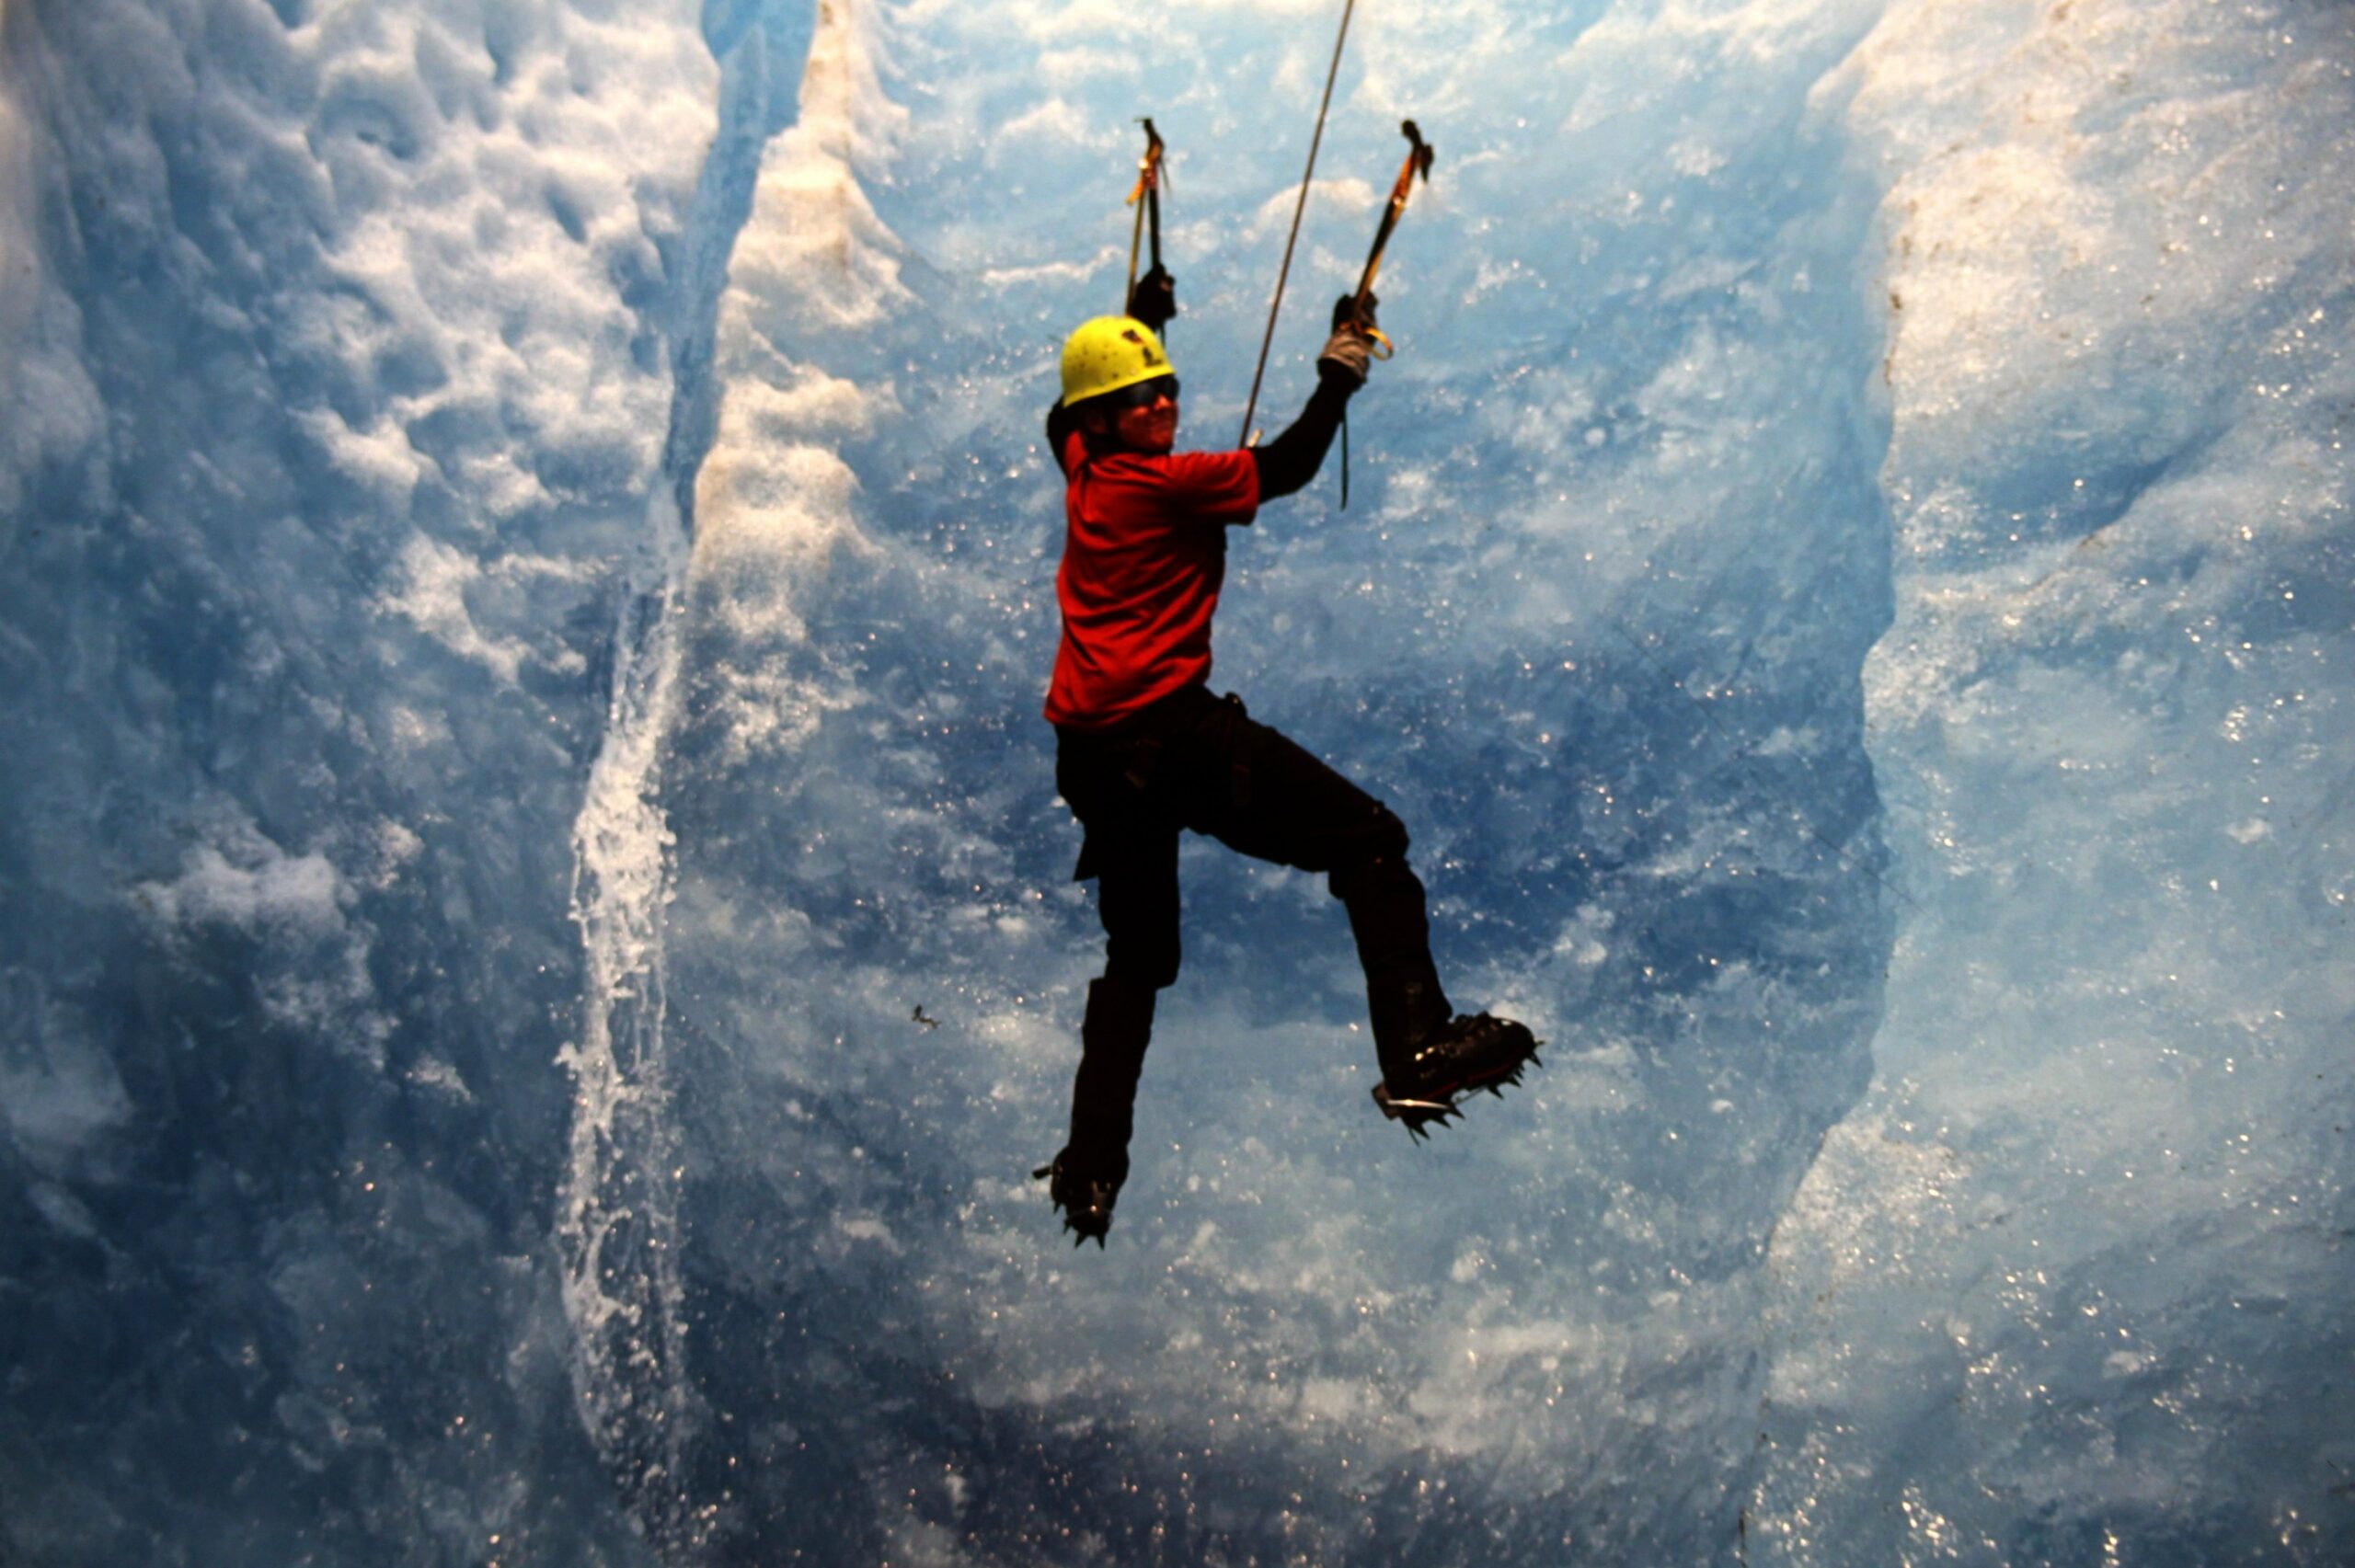 2004 active ice climbing